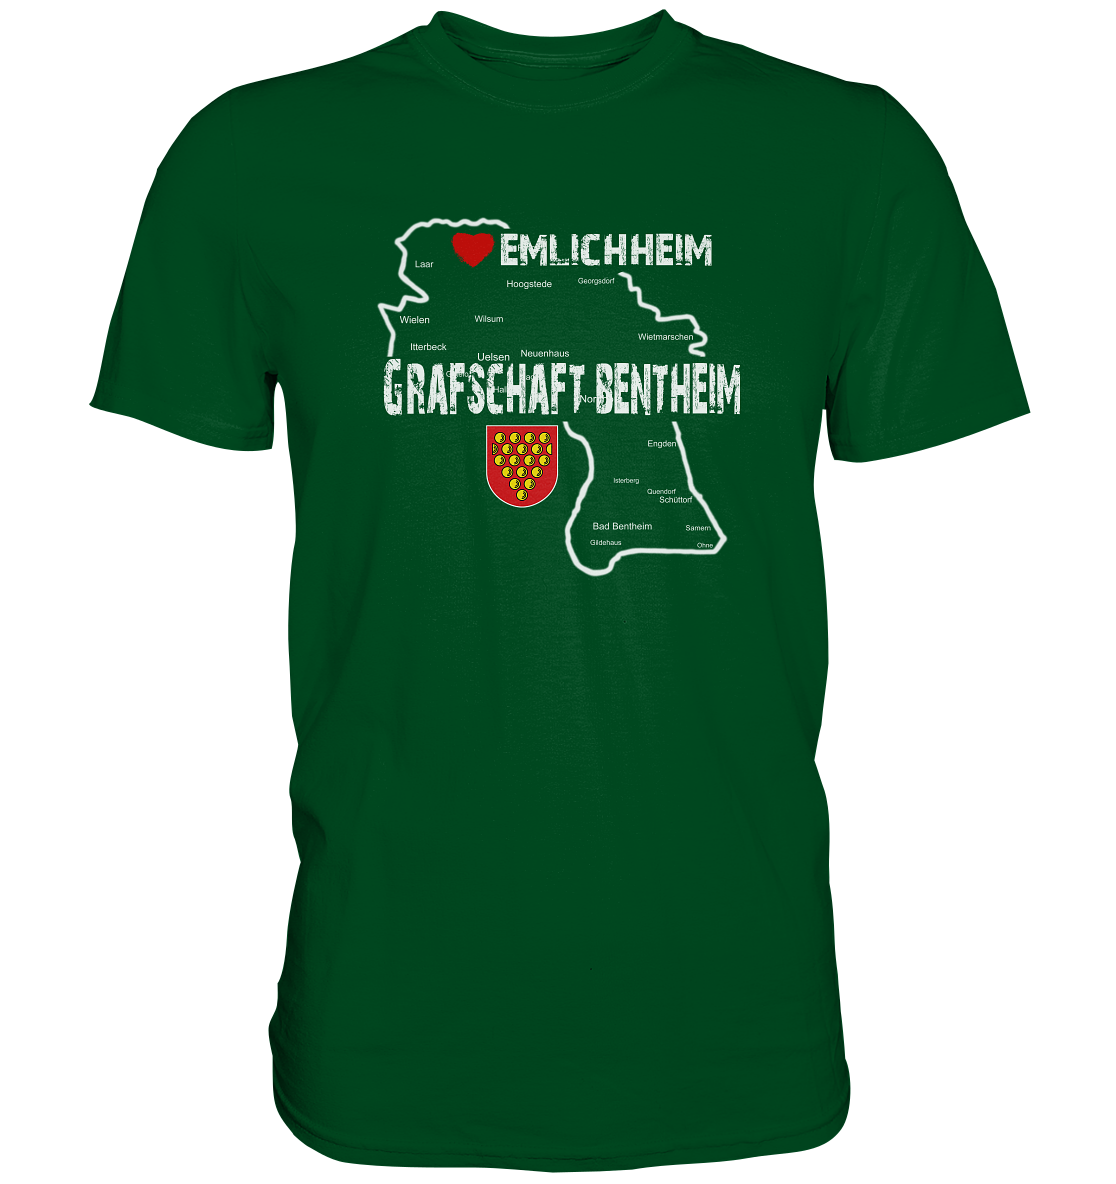 Hometown Shirt "Emlichheim" - Premium Shirt